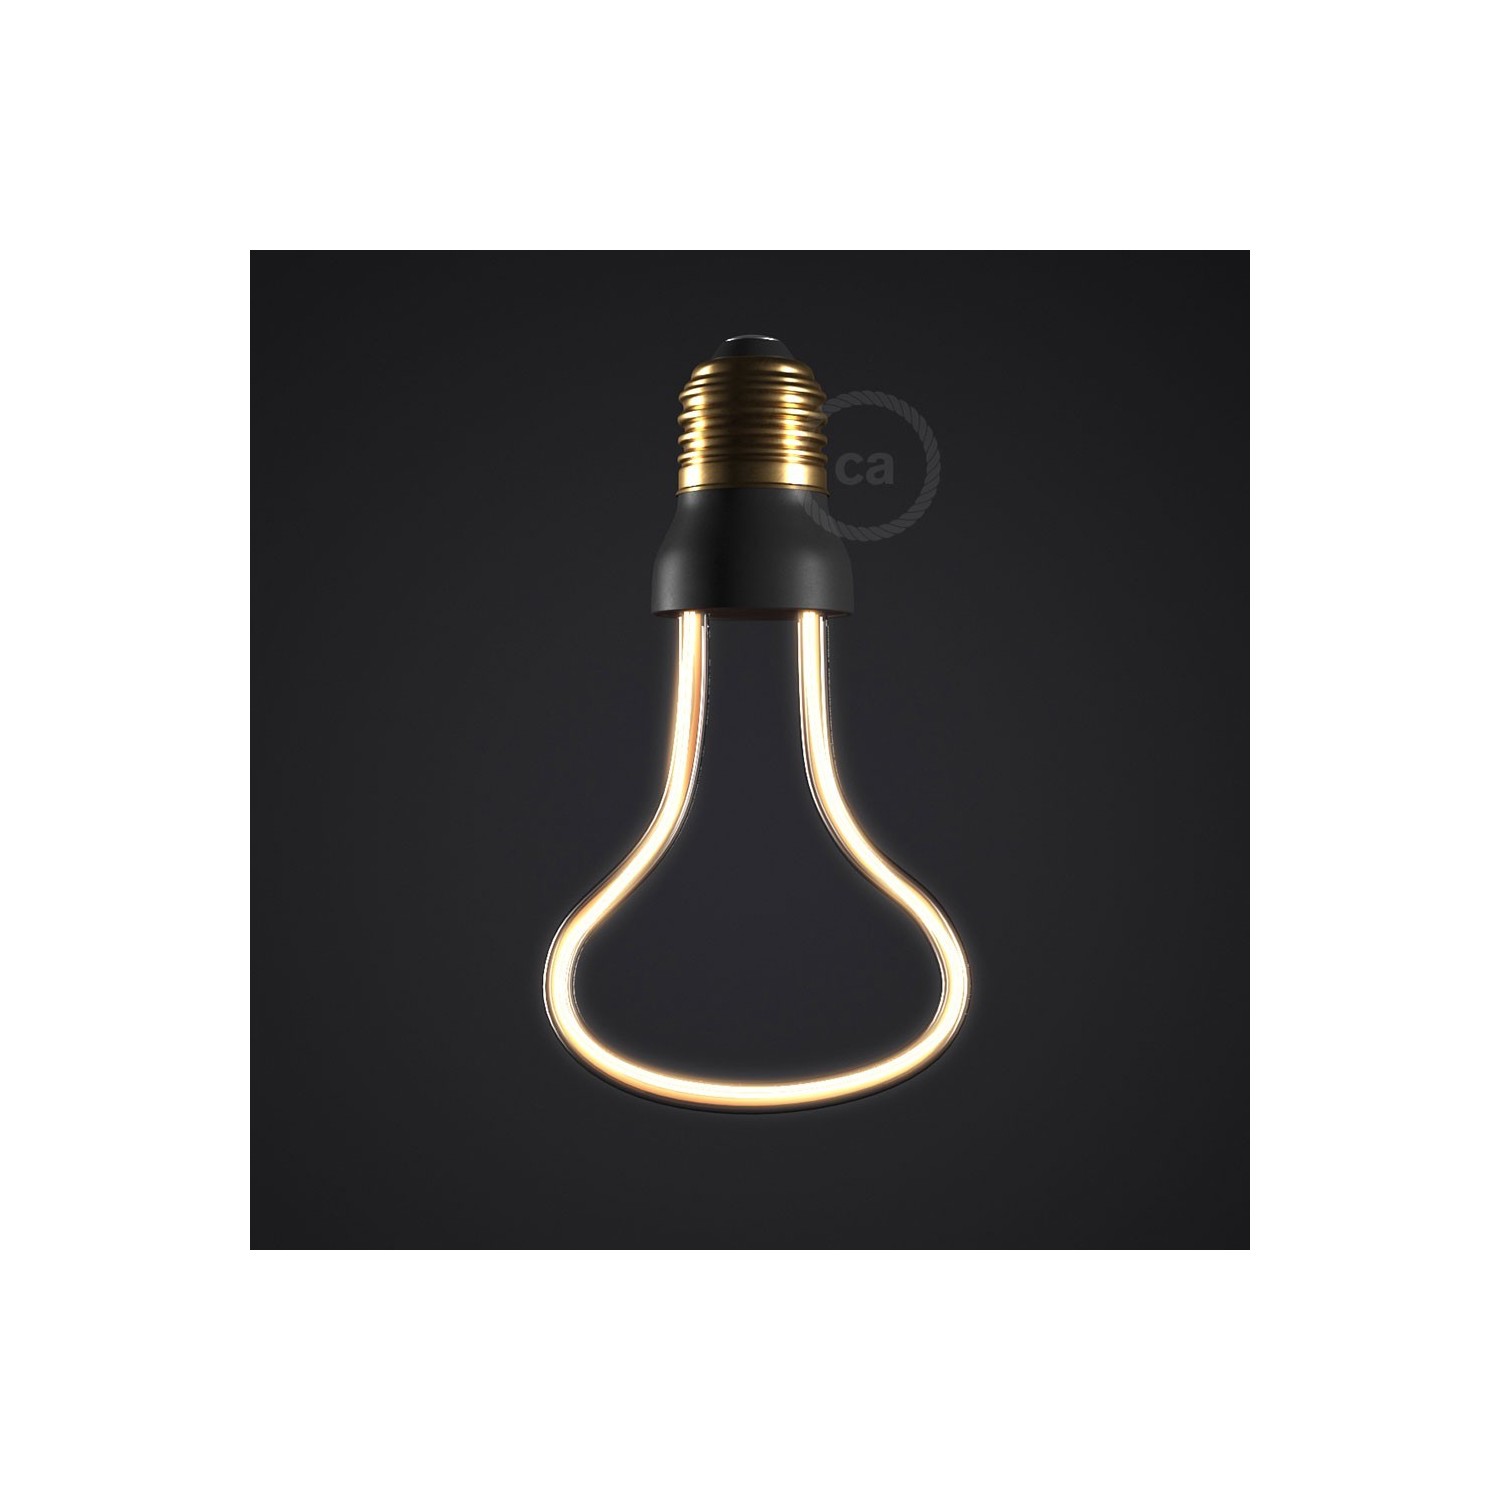 LED Art Reflecto Light Bulb 8W 300Lm E27 2200K Dimmable